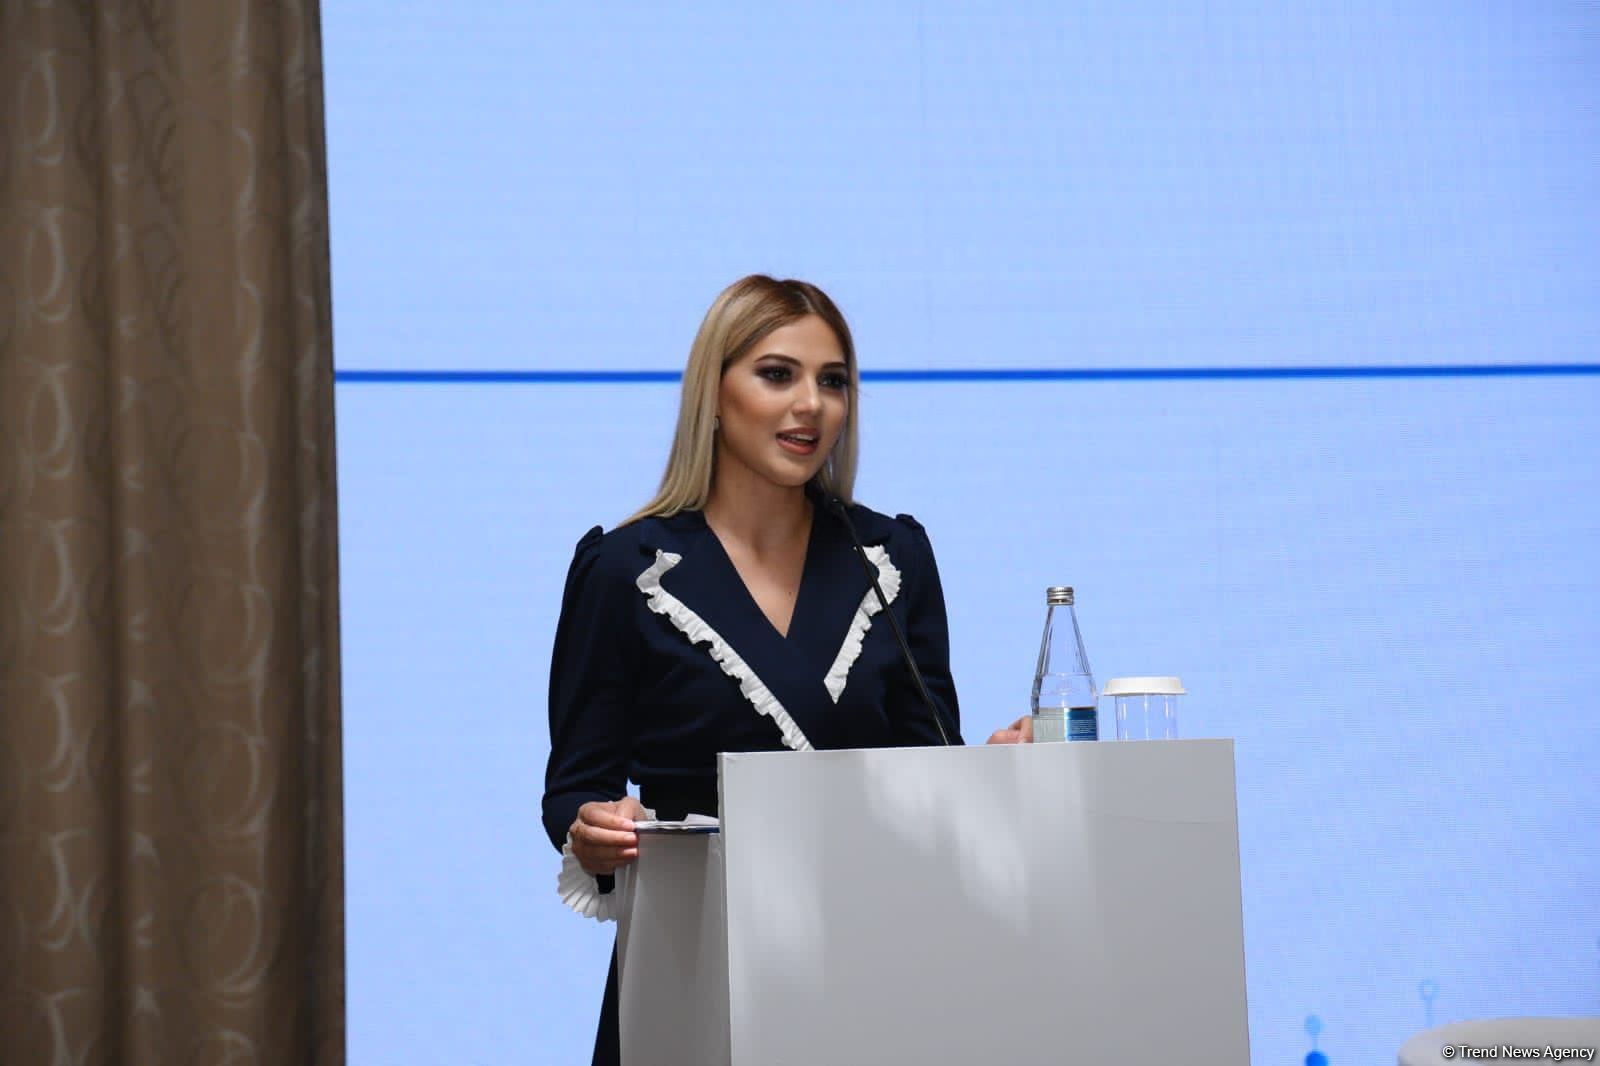 Presentation of E-Kiosk digital platform for newspapers, magazines held in Baku (PHOTO/VIDEO)